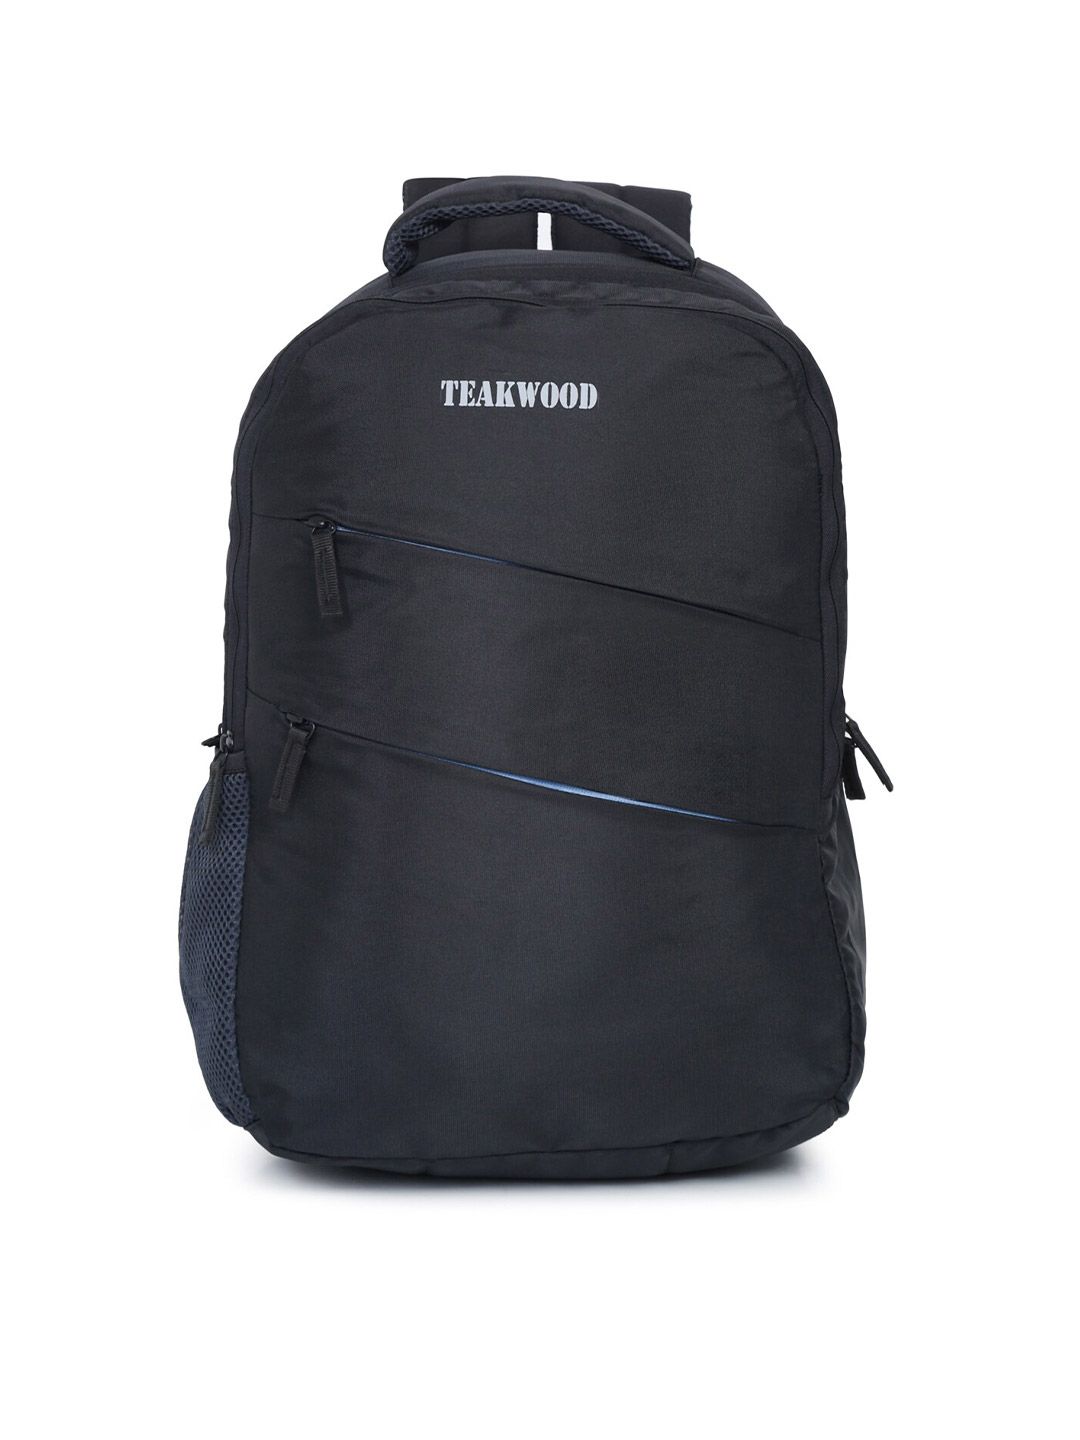 Teakwood Leathers Unisex Black Solid Backpack Price in India